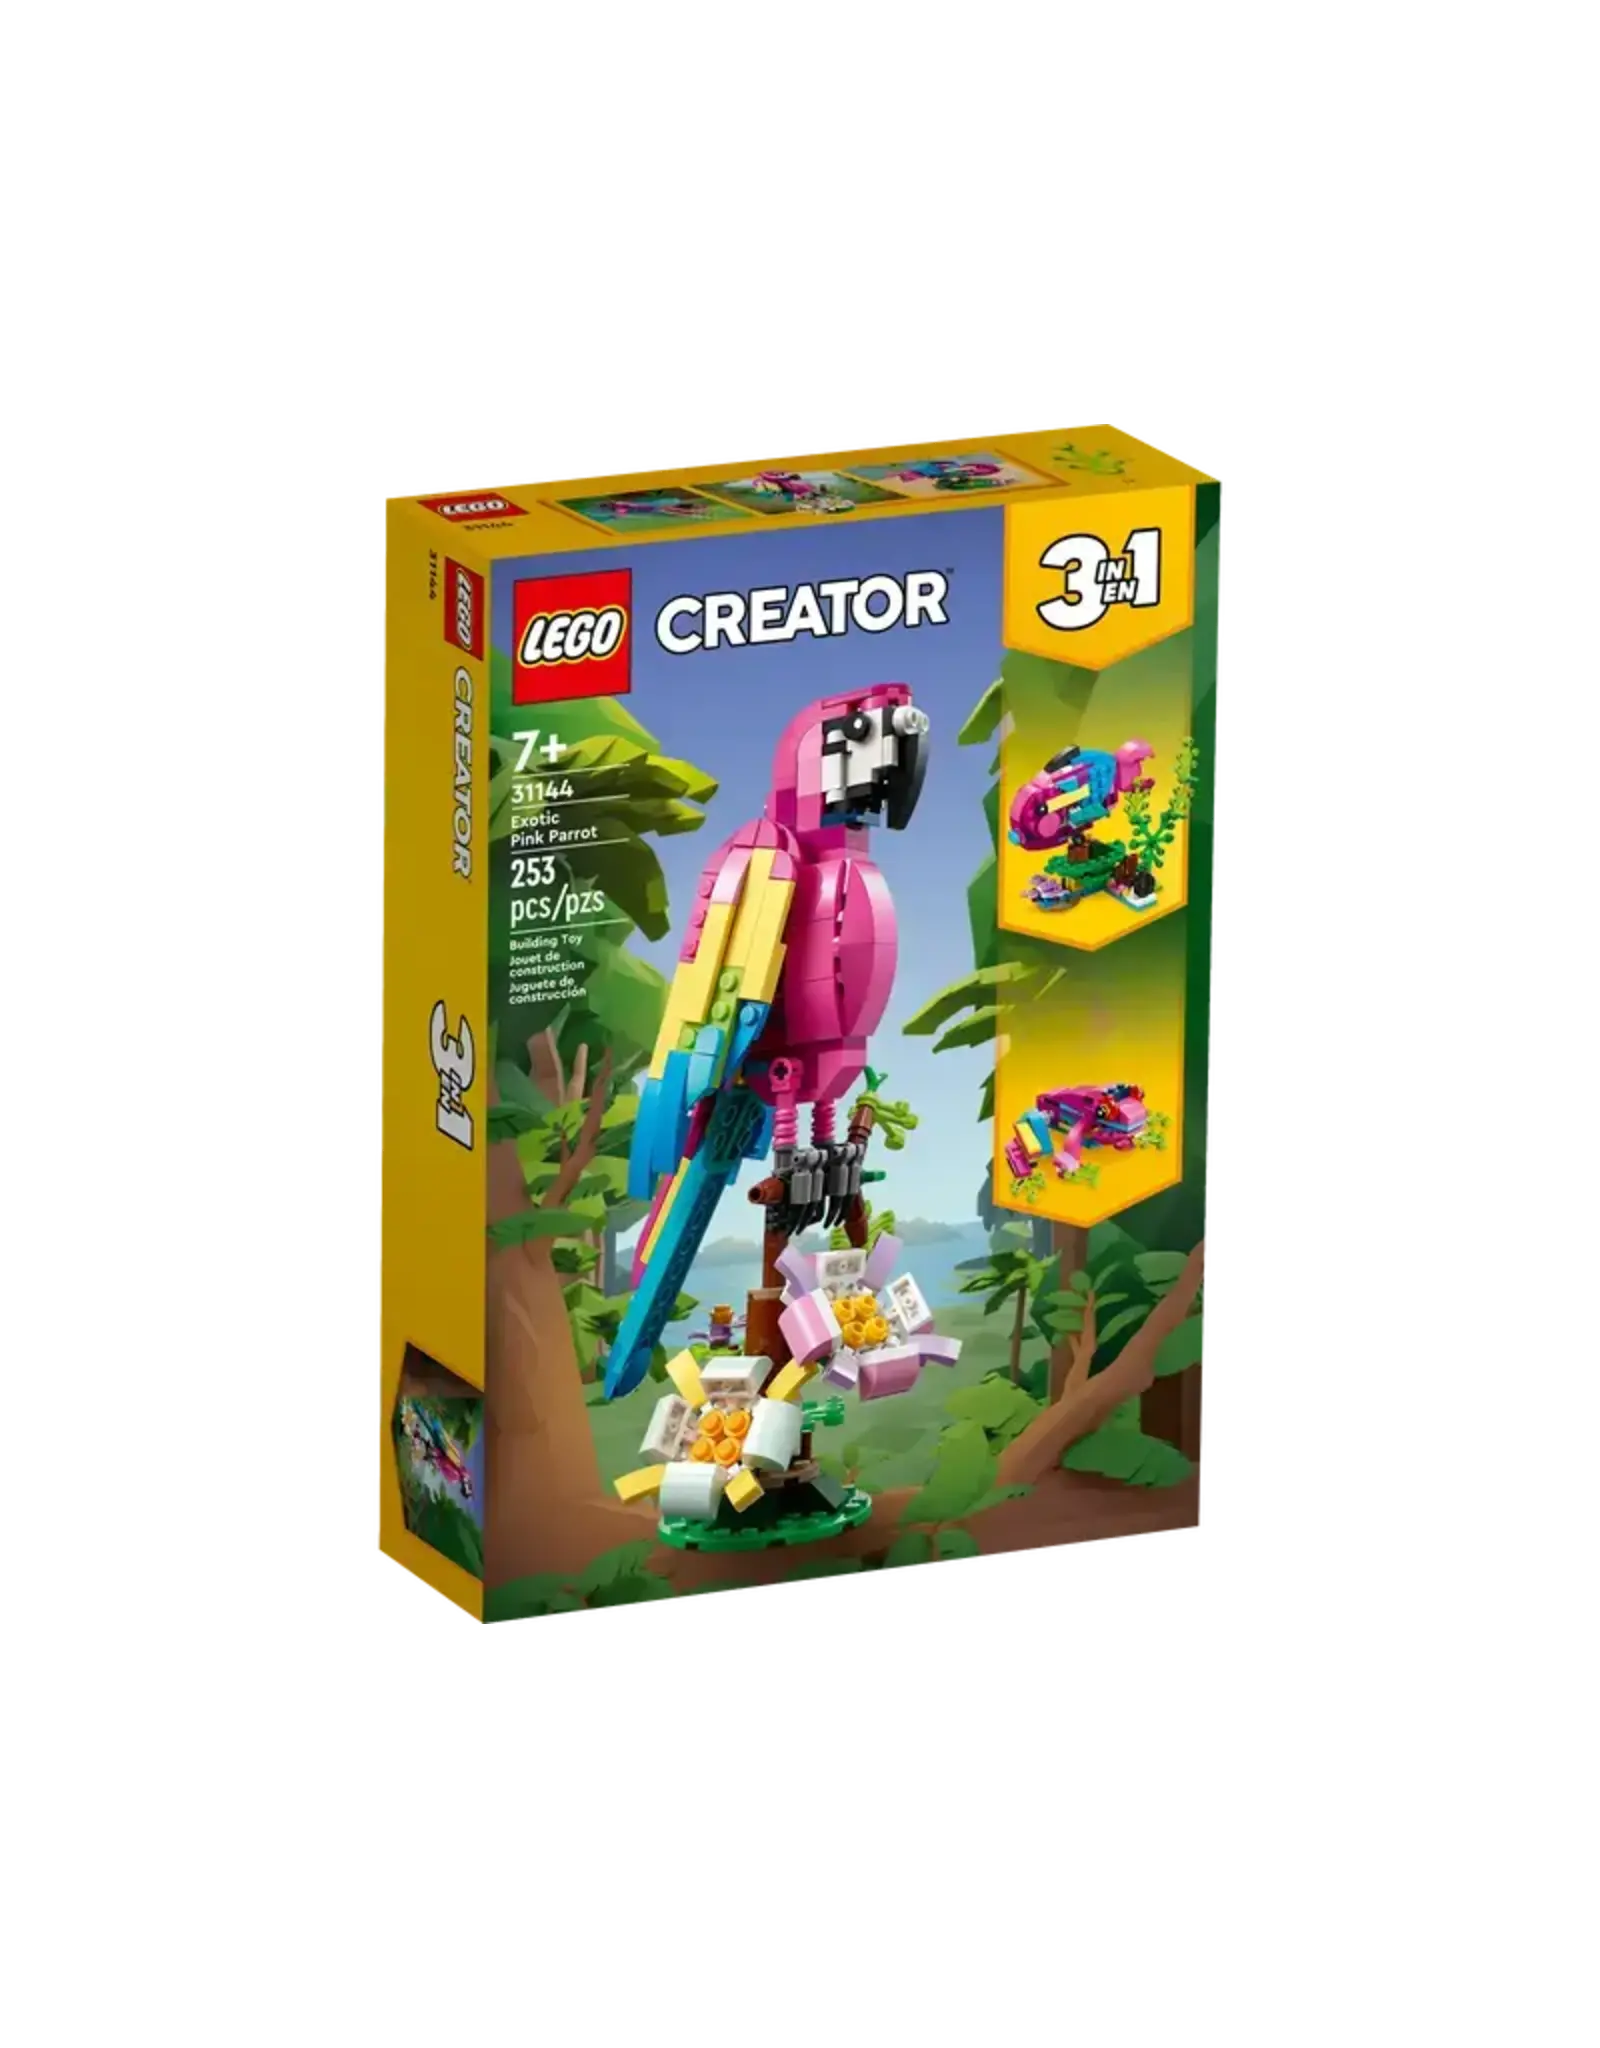 LEGO LEGO Exotic Pink Parrot